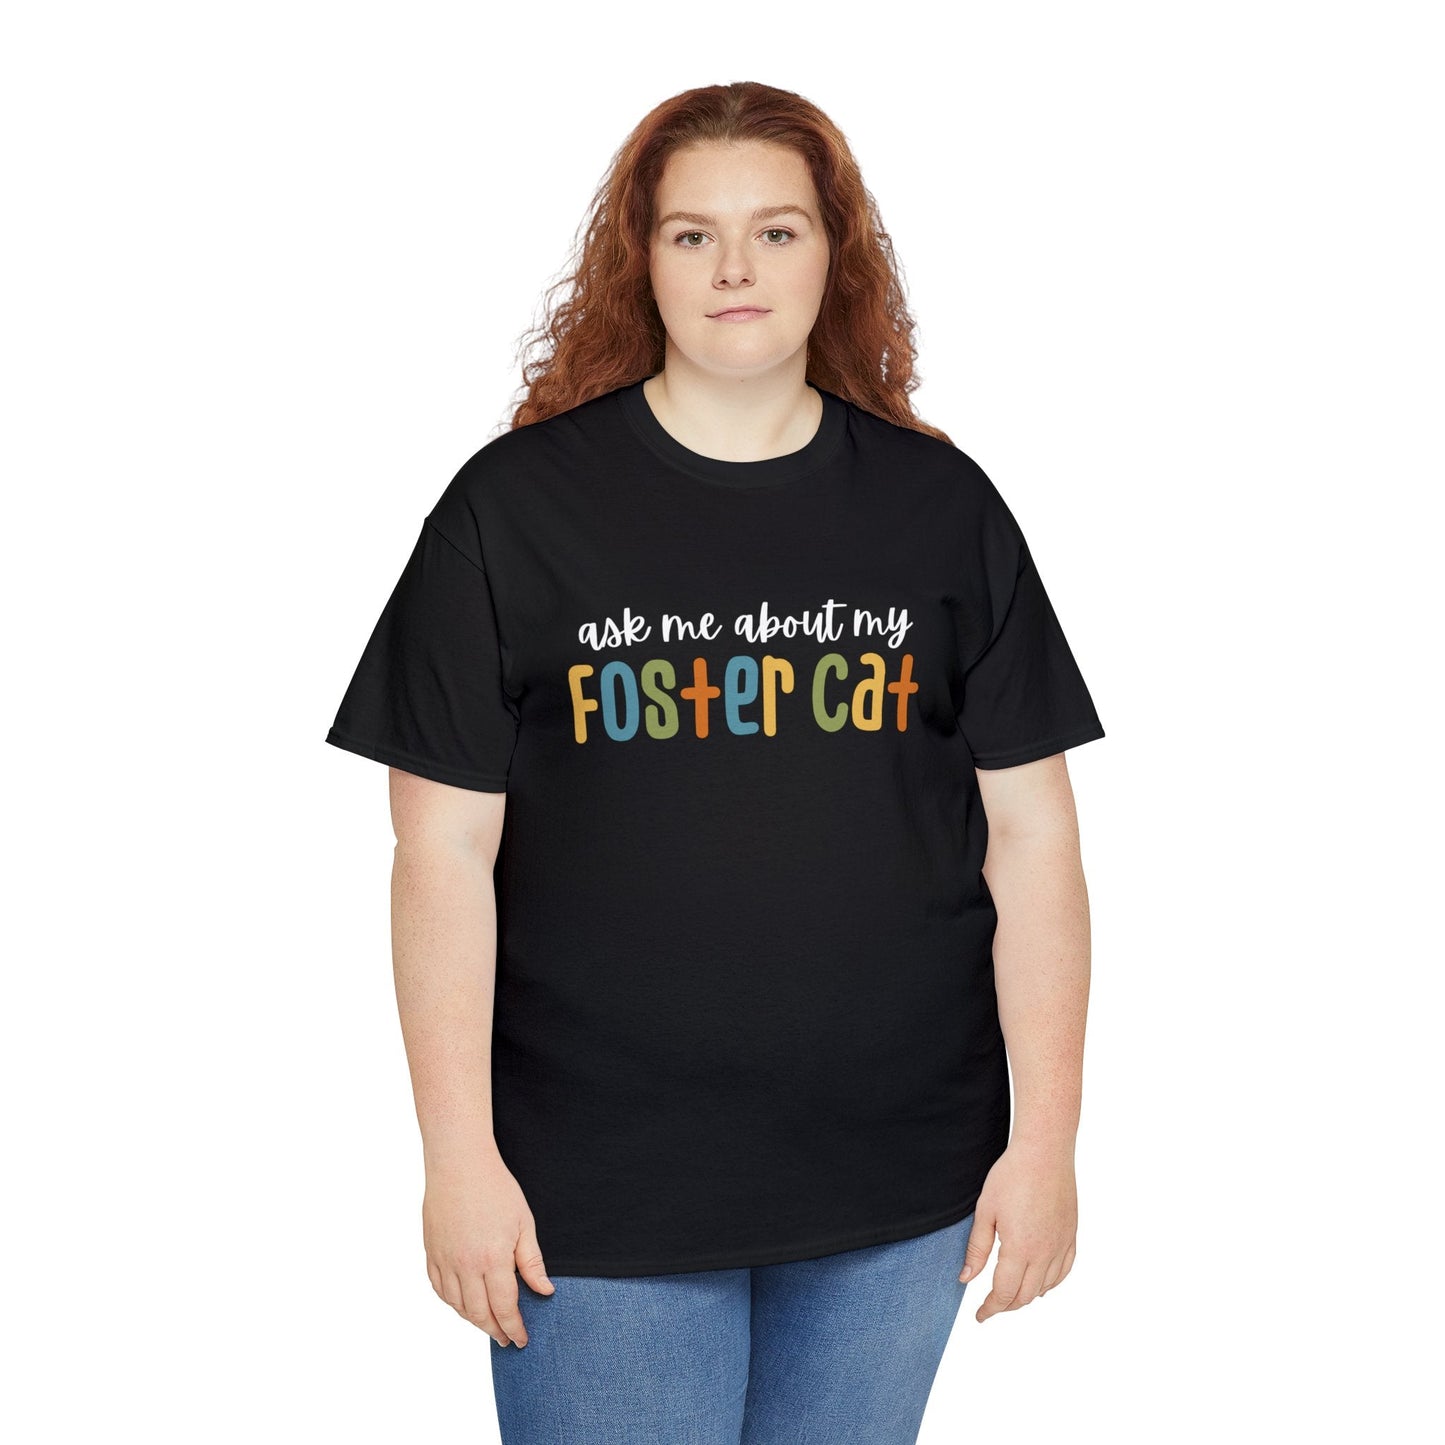 Ask Me About My Foster Cat - Retro Colors | Text Tees - Detezi Designs-91759099283691853190